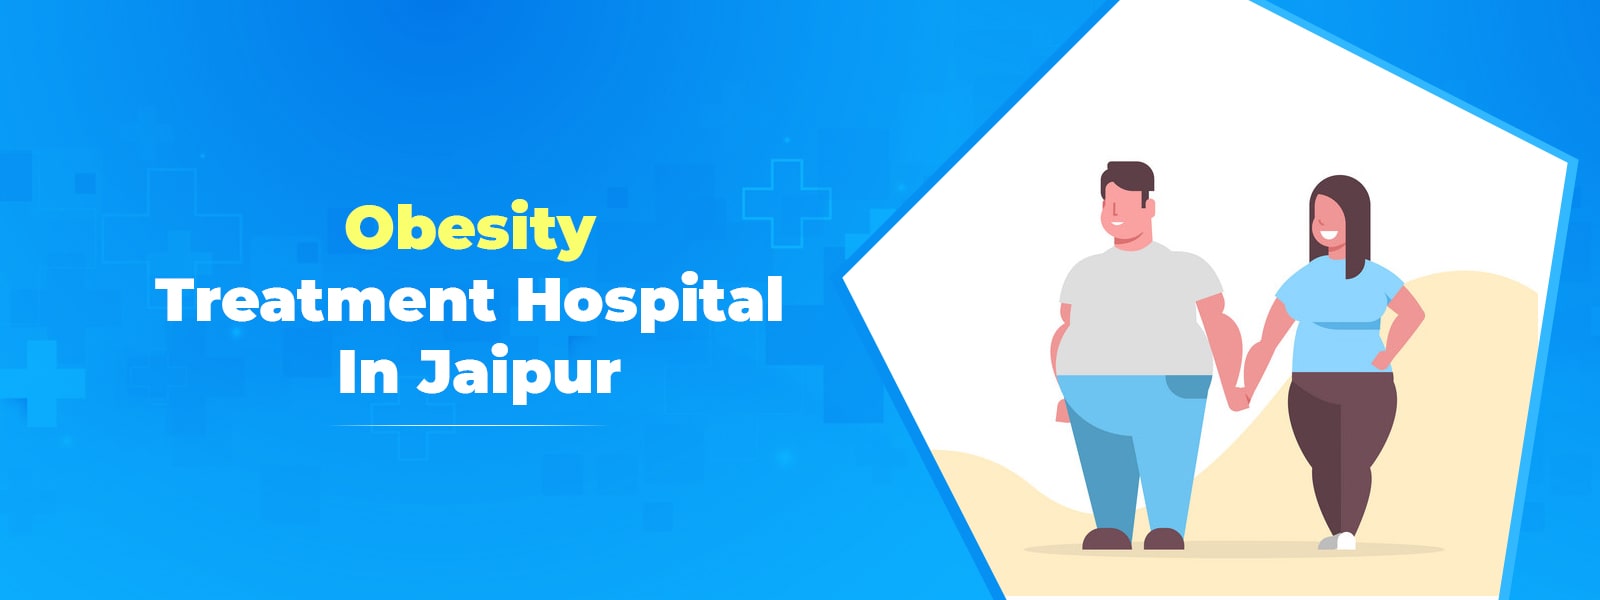 Obesity treatment hospital in Jaipur